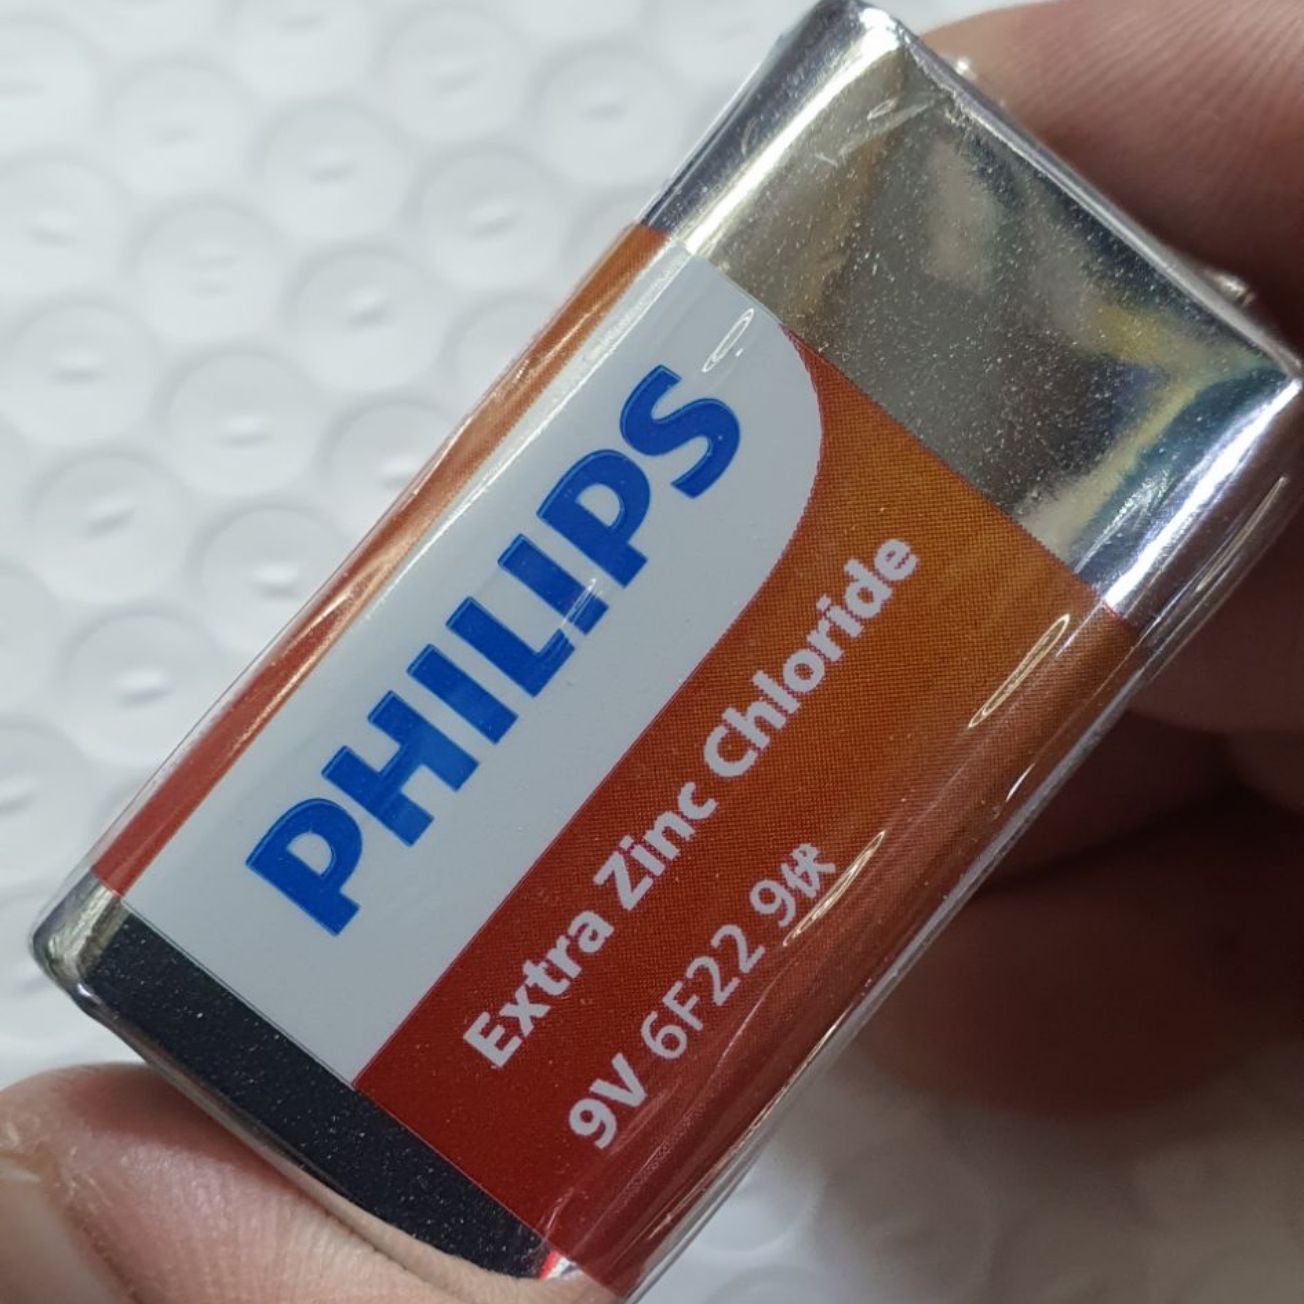 Philips 9V Block Zinc Chloride 6F22 Blister de 1